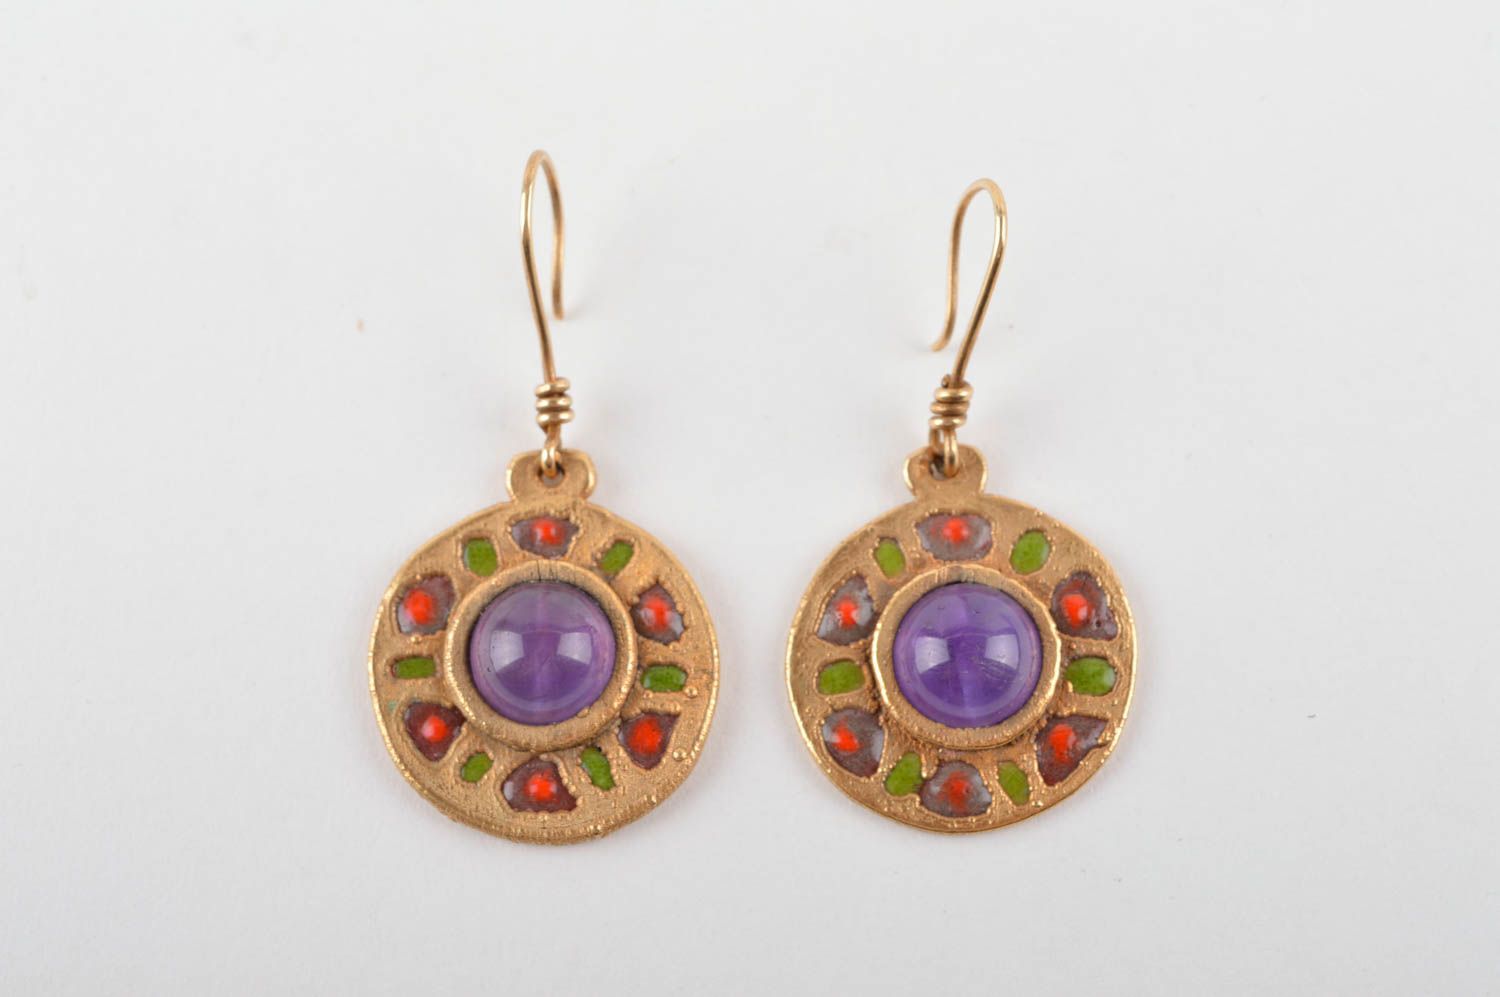 Handmade metal earrings gemstone earrings for girls cool jewelry gifts for her photo 3